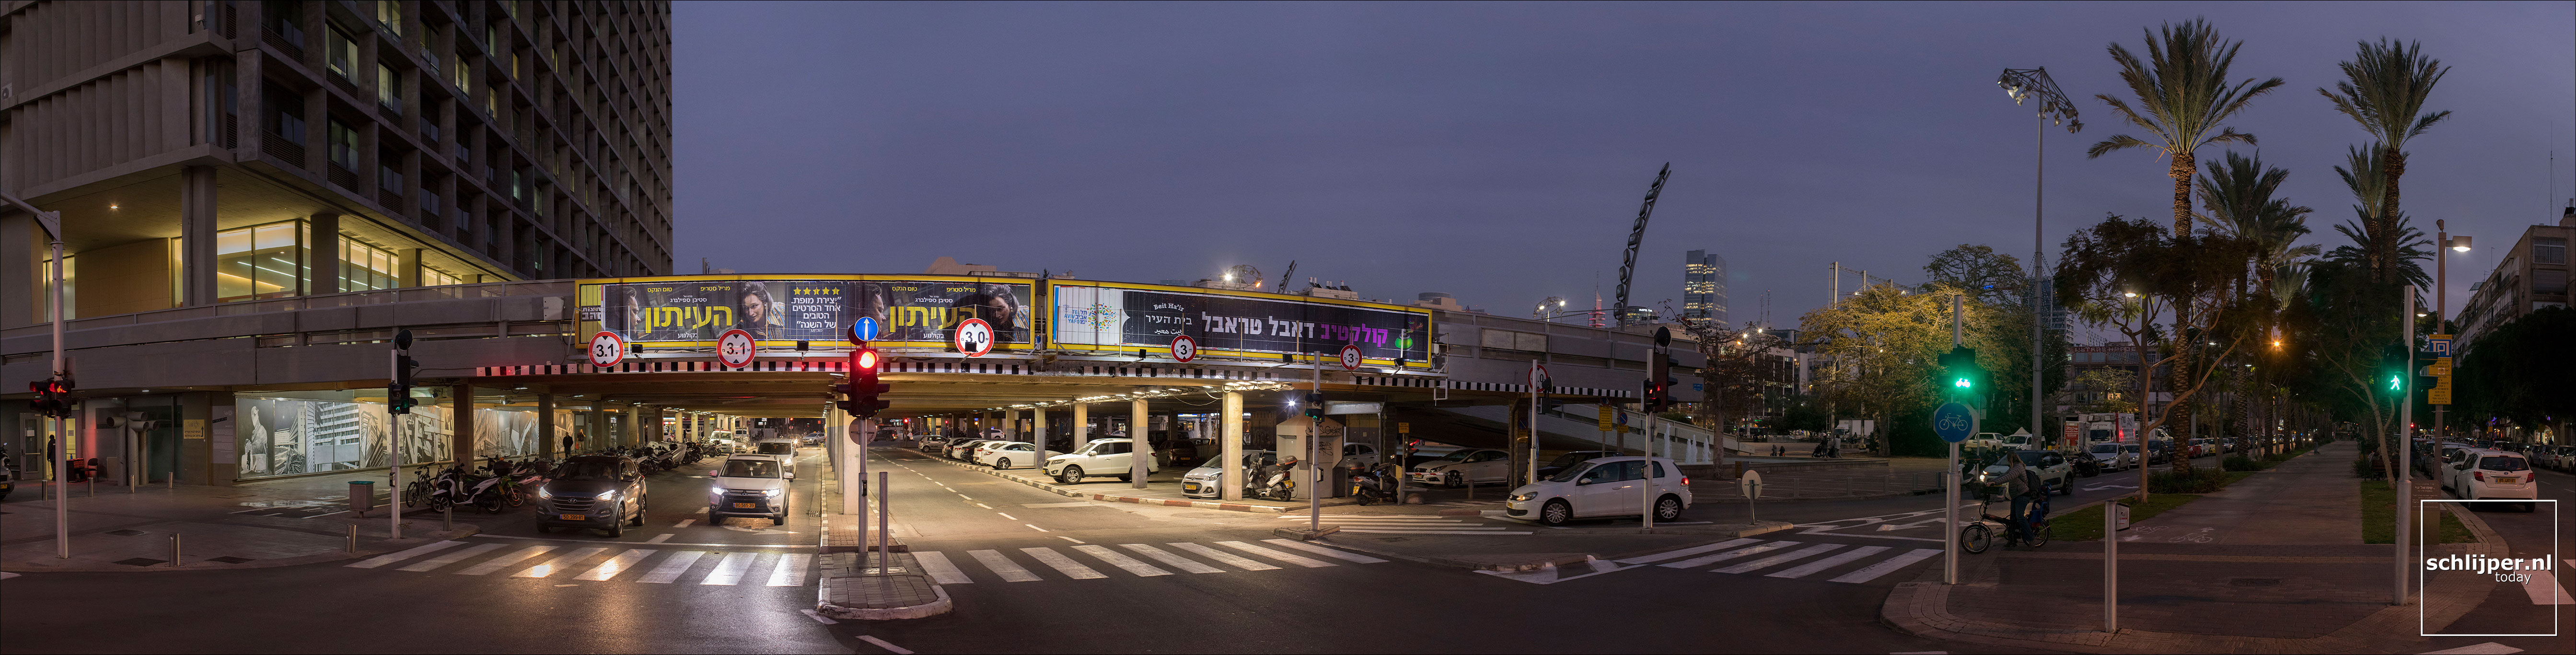 Israel, Tel Aviv, 3 januari 2018